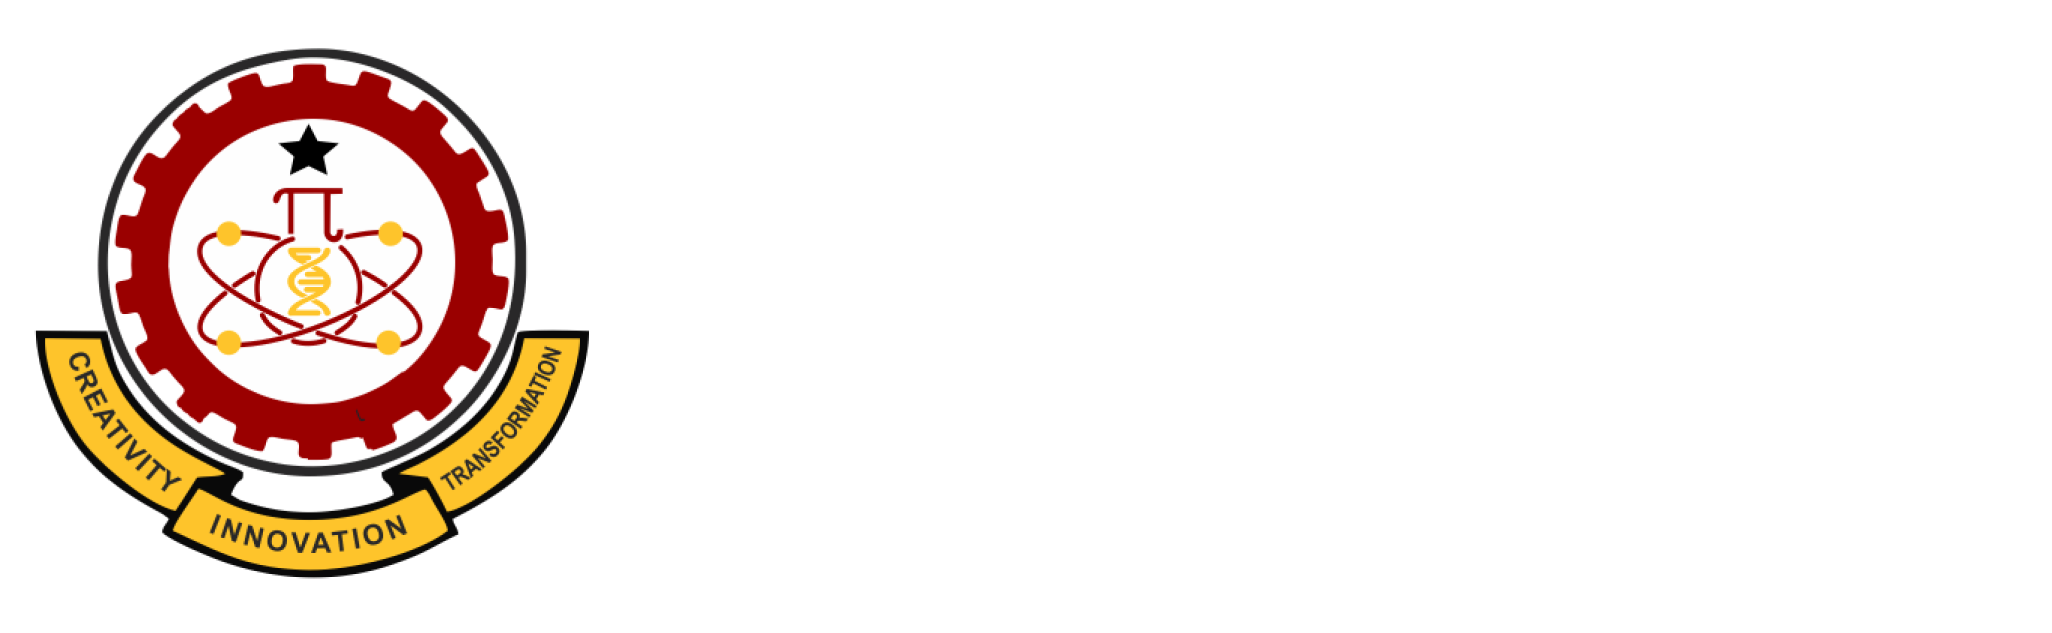 School of Environment and Life Sciences - CKT-UTAS